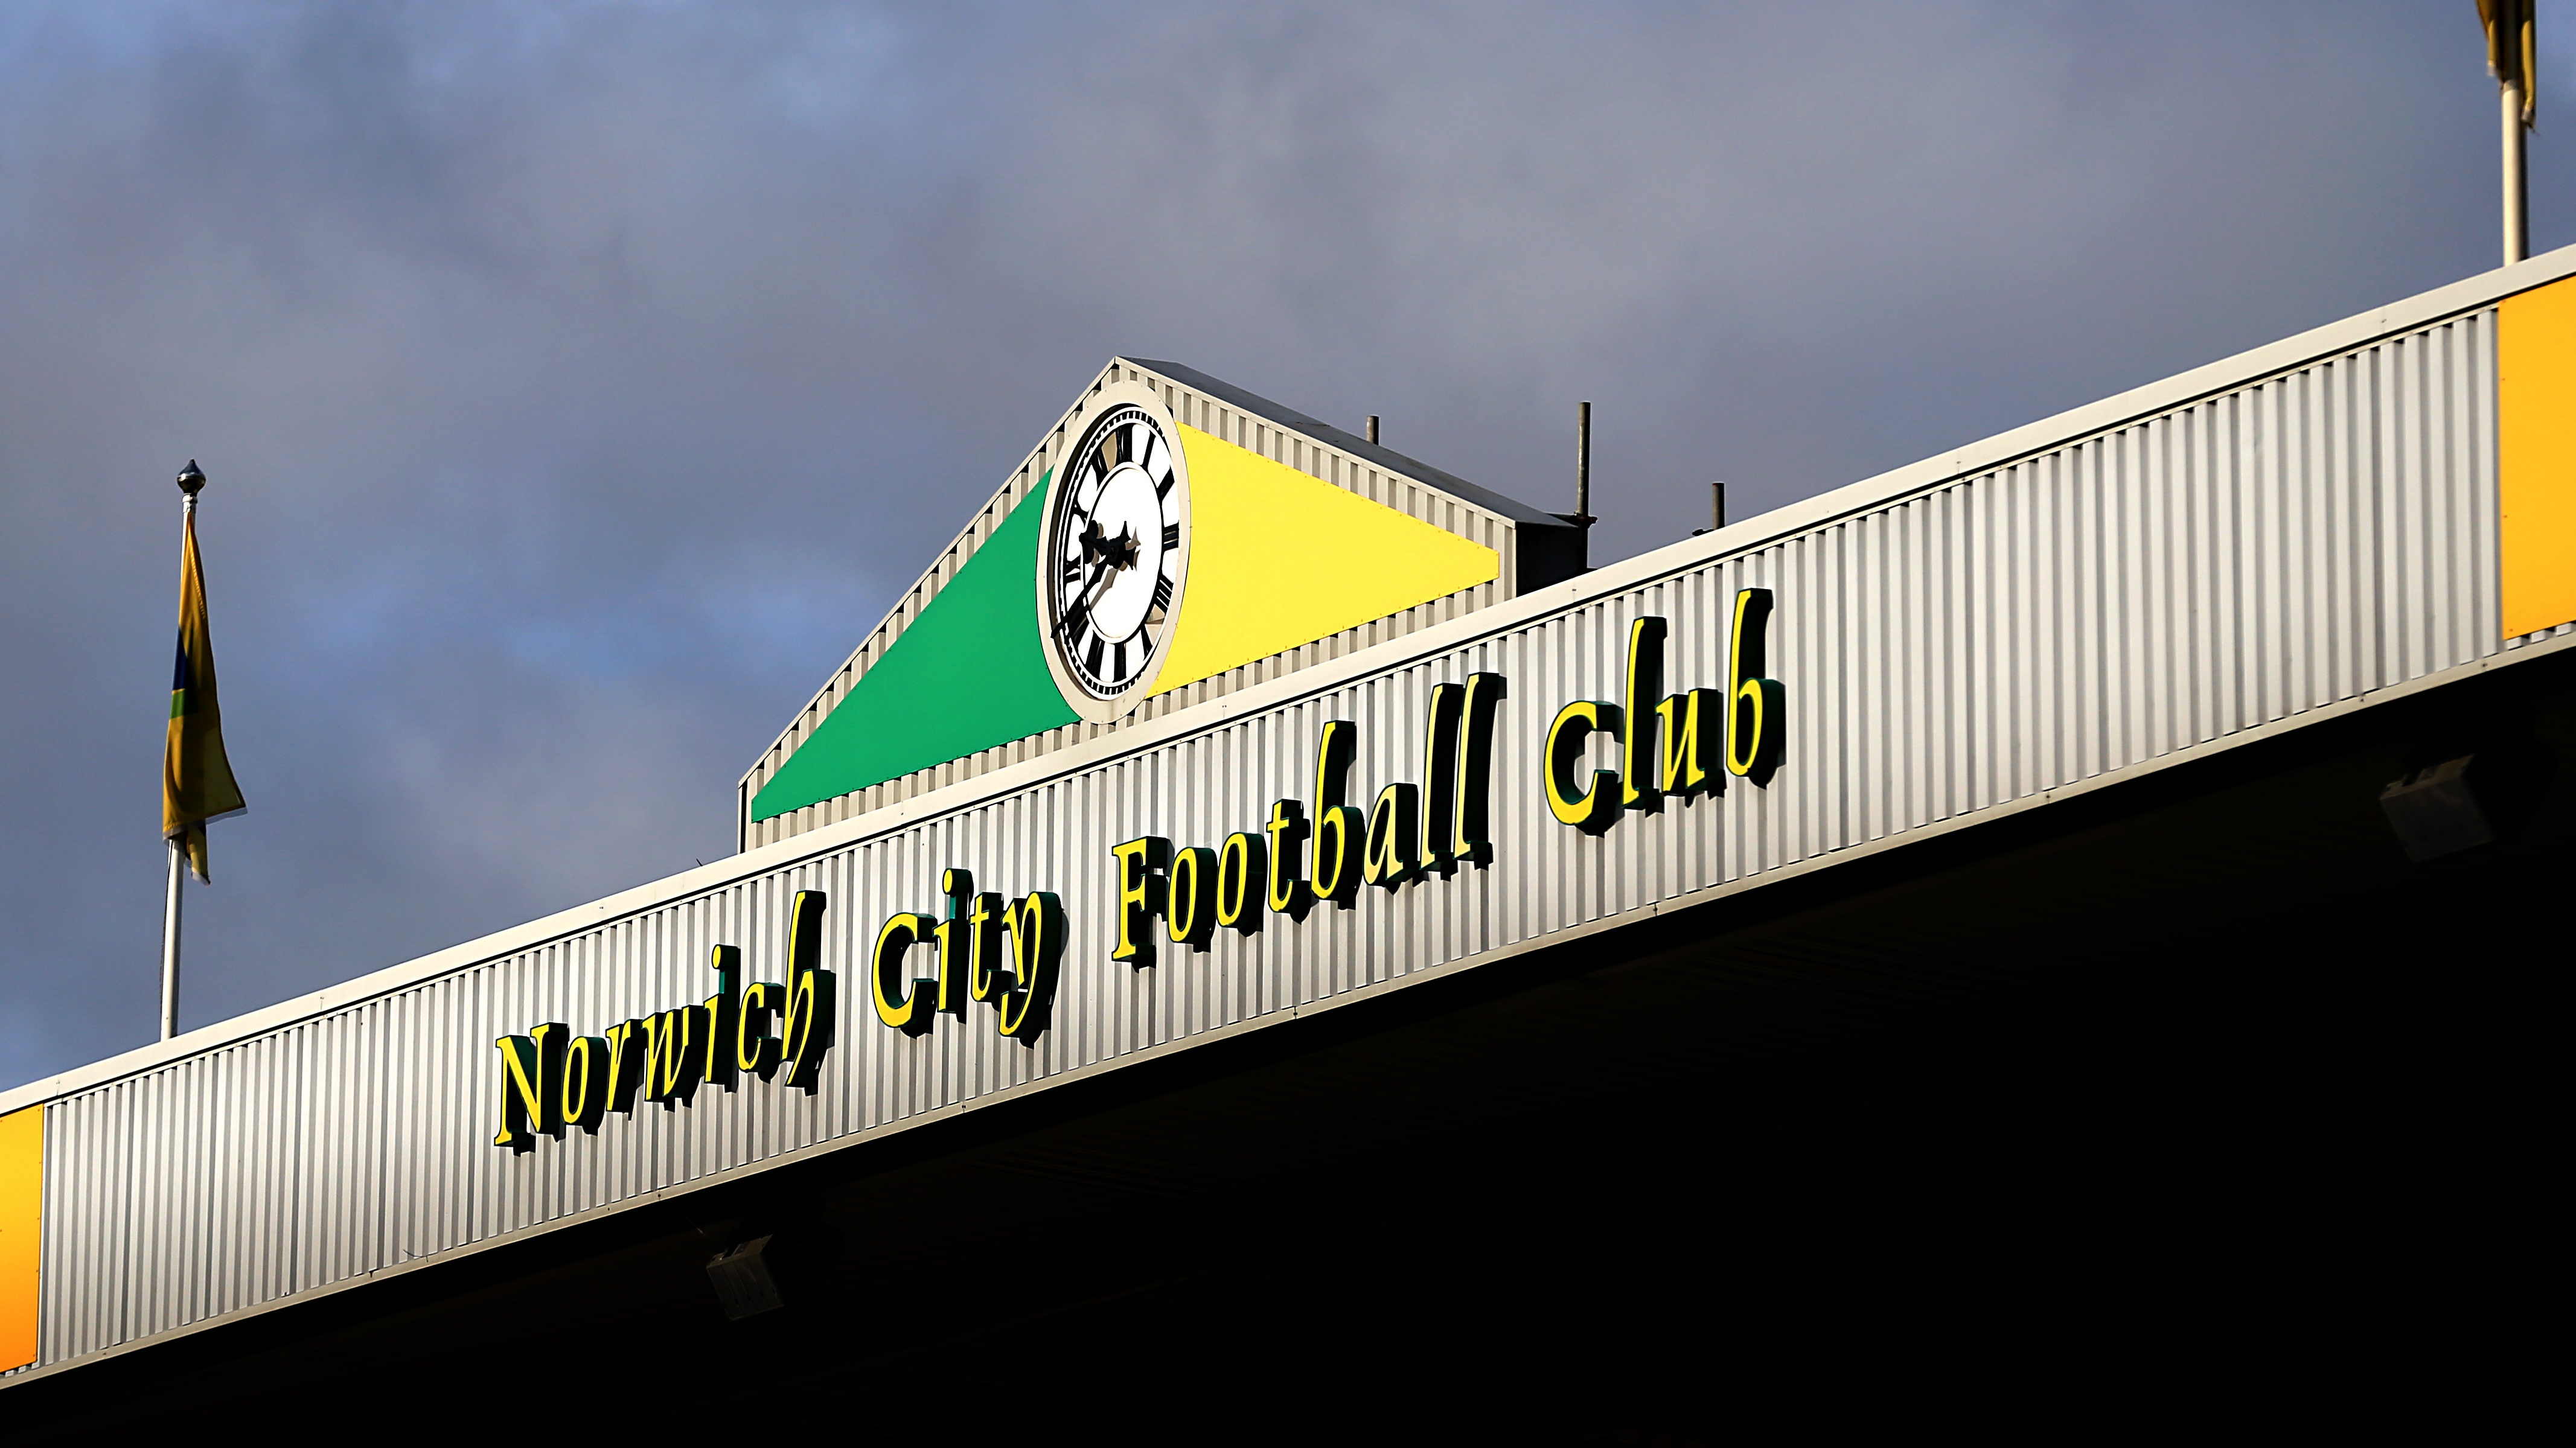 Norwich City's Carrow Road stadium